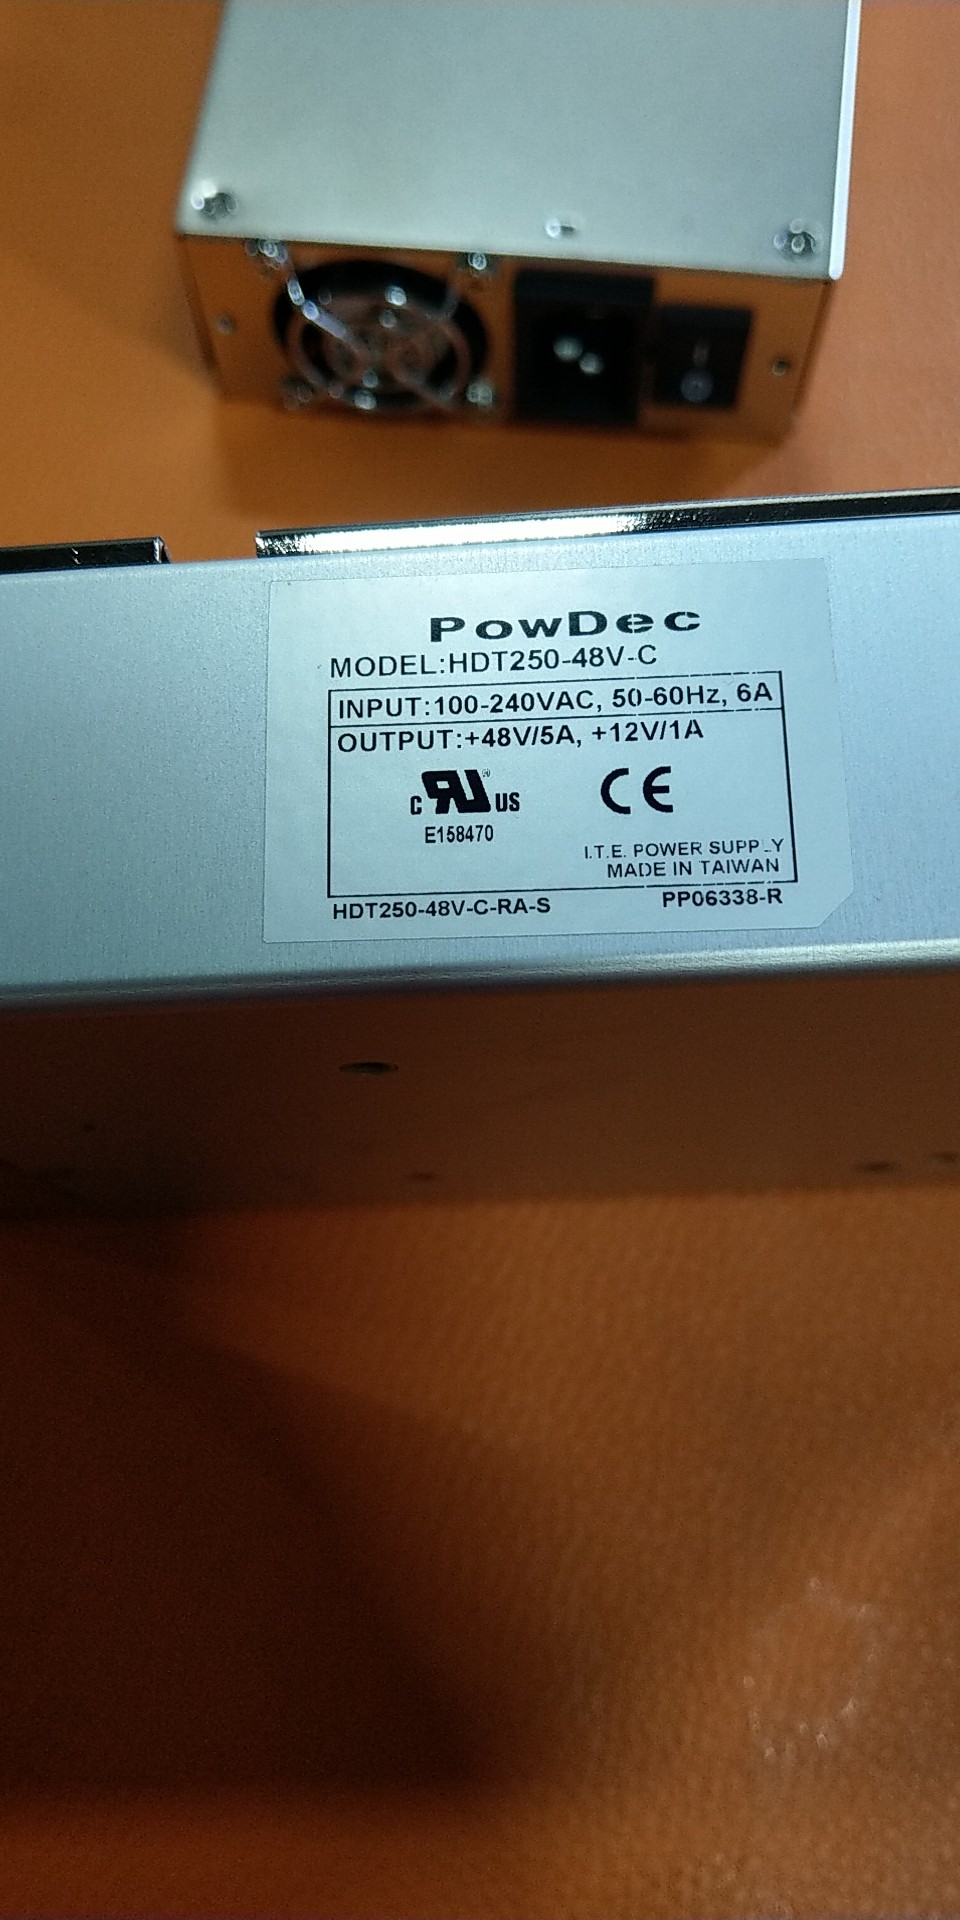 POWDec HDT250-48V-C 电源模块 二手拆机 POWDec,HDT250-48V-C,模块,二手,拆机